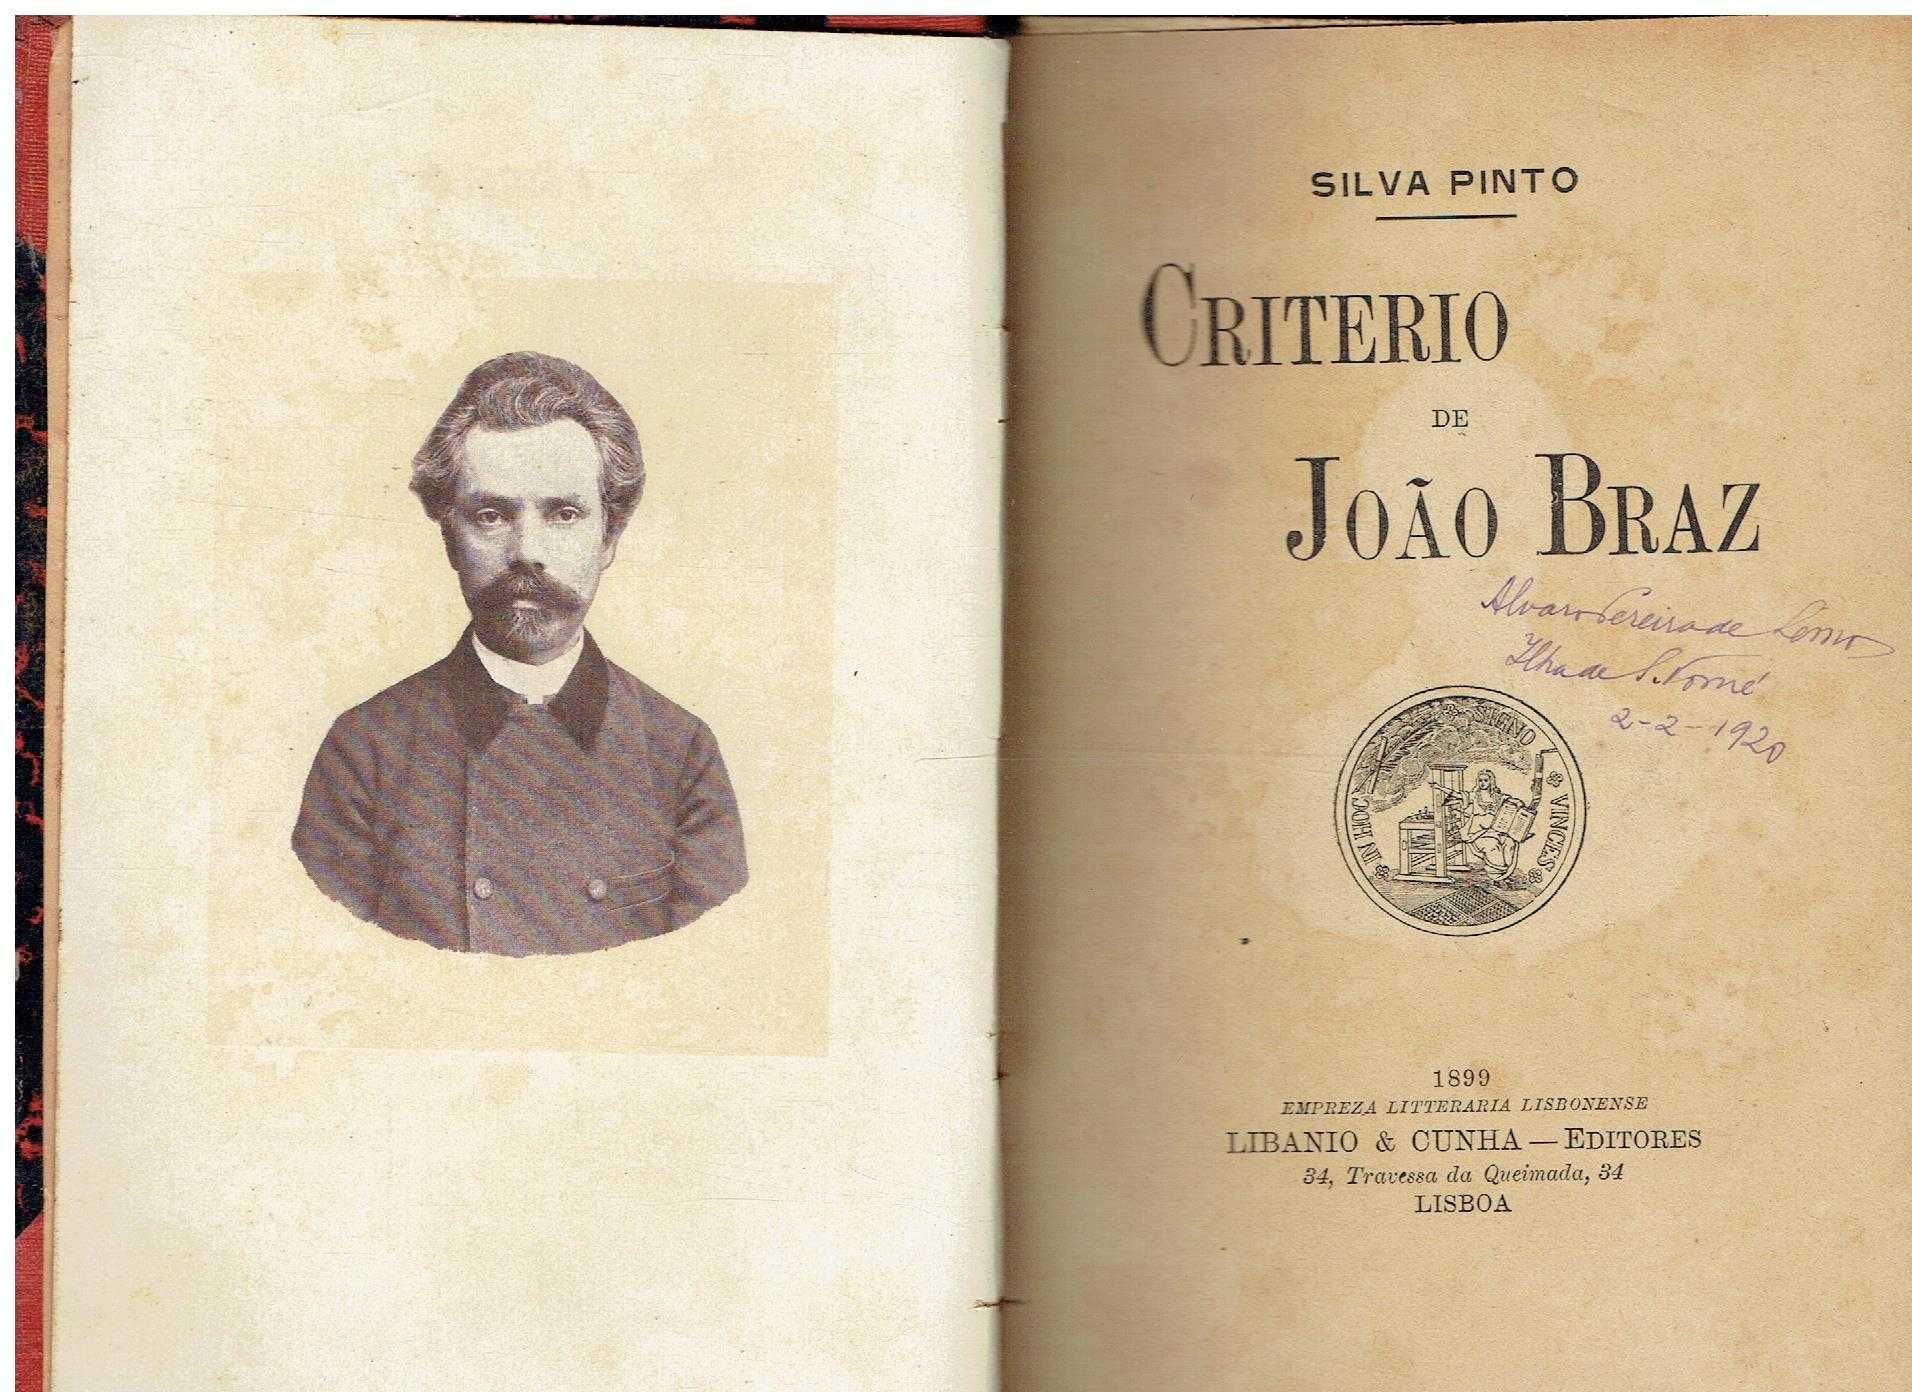 13993

Critério de João Braz 
Antonio José da Silva Pinto